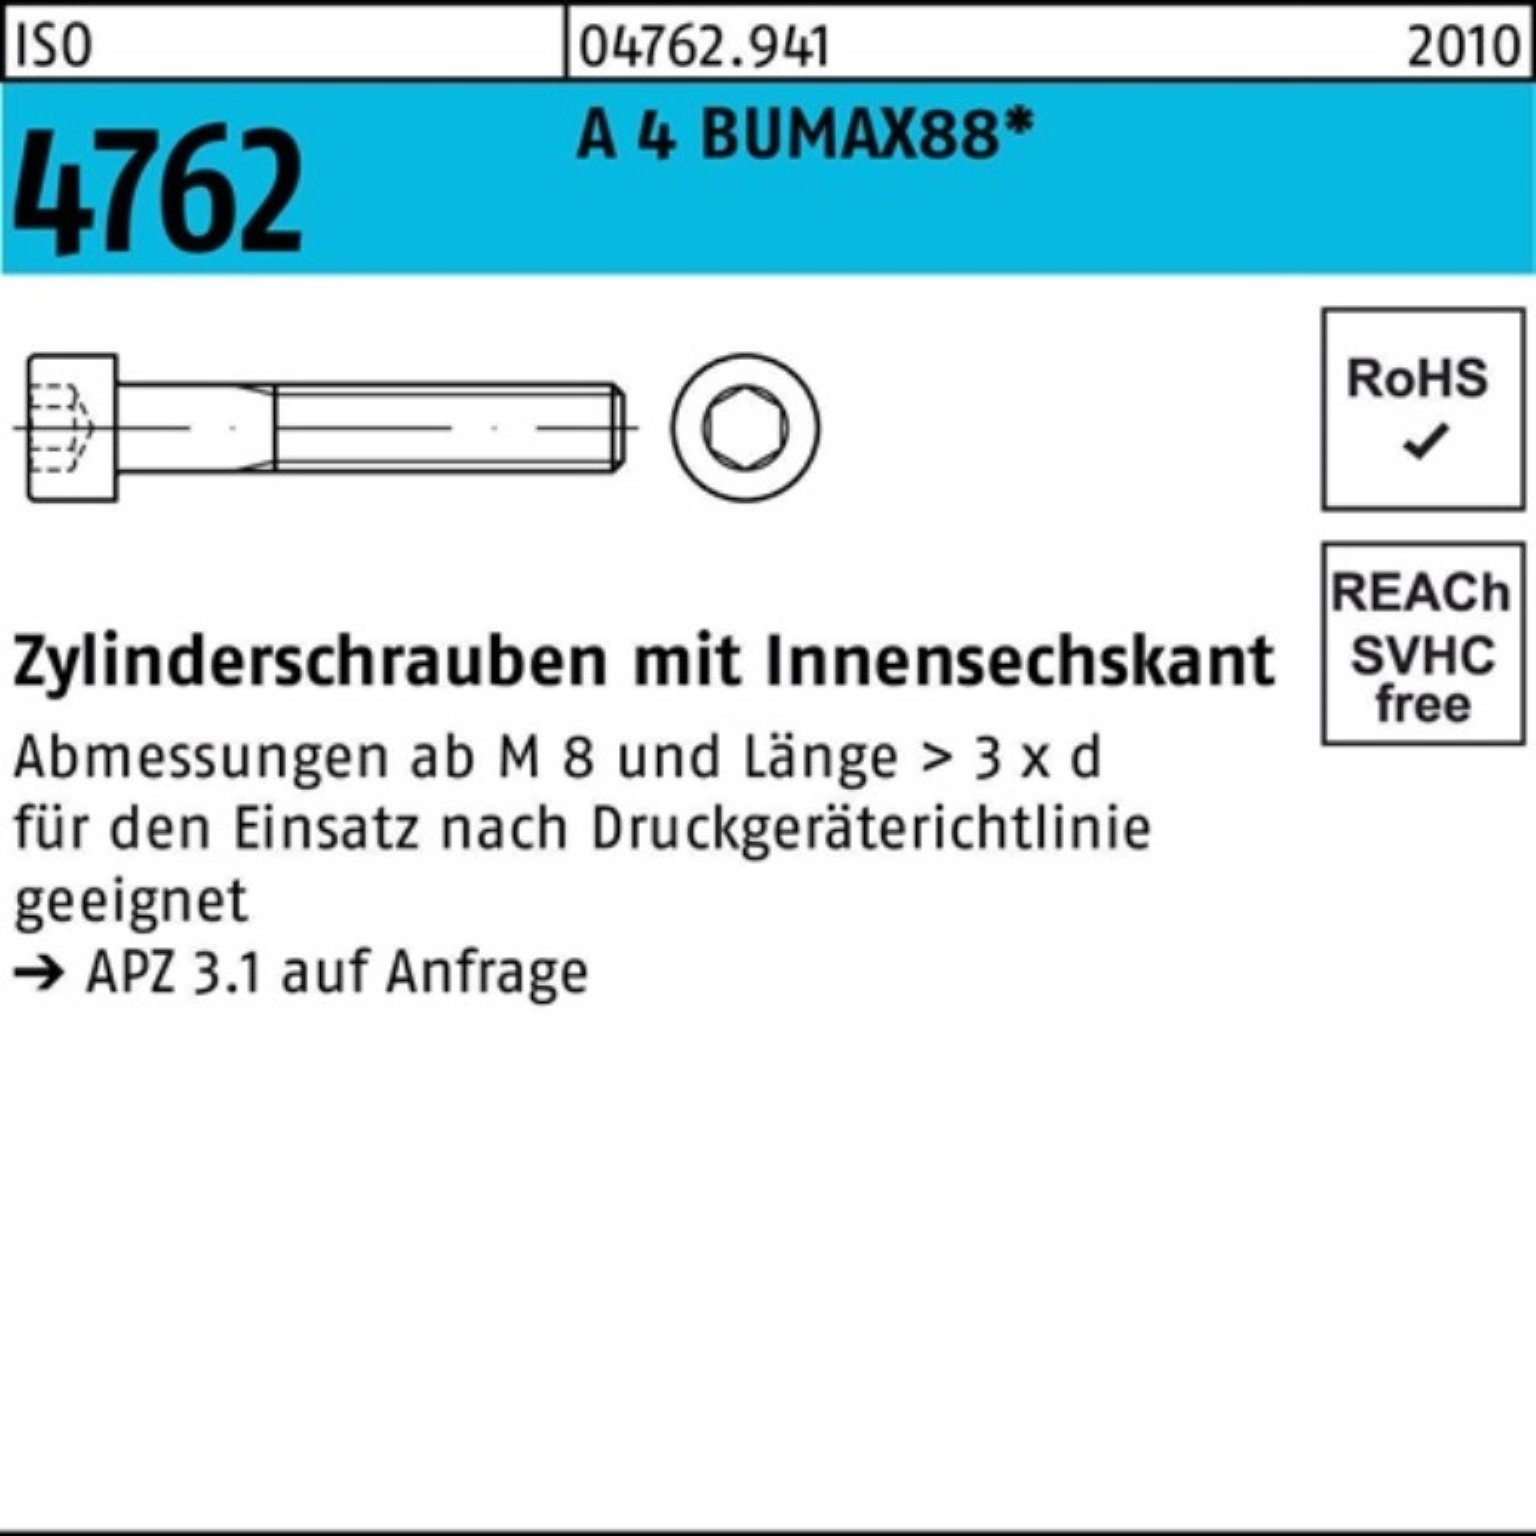 Bufab Pack 4762 100 BUMAX88 Zylinderschraube 100er M5x ISO 40 Innen-6kt 4 Zylinderschraube A